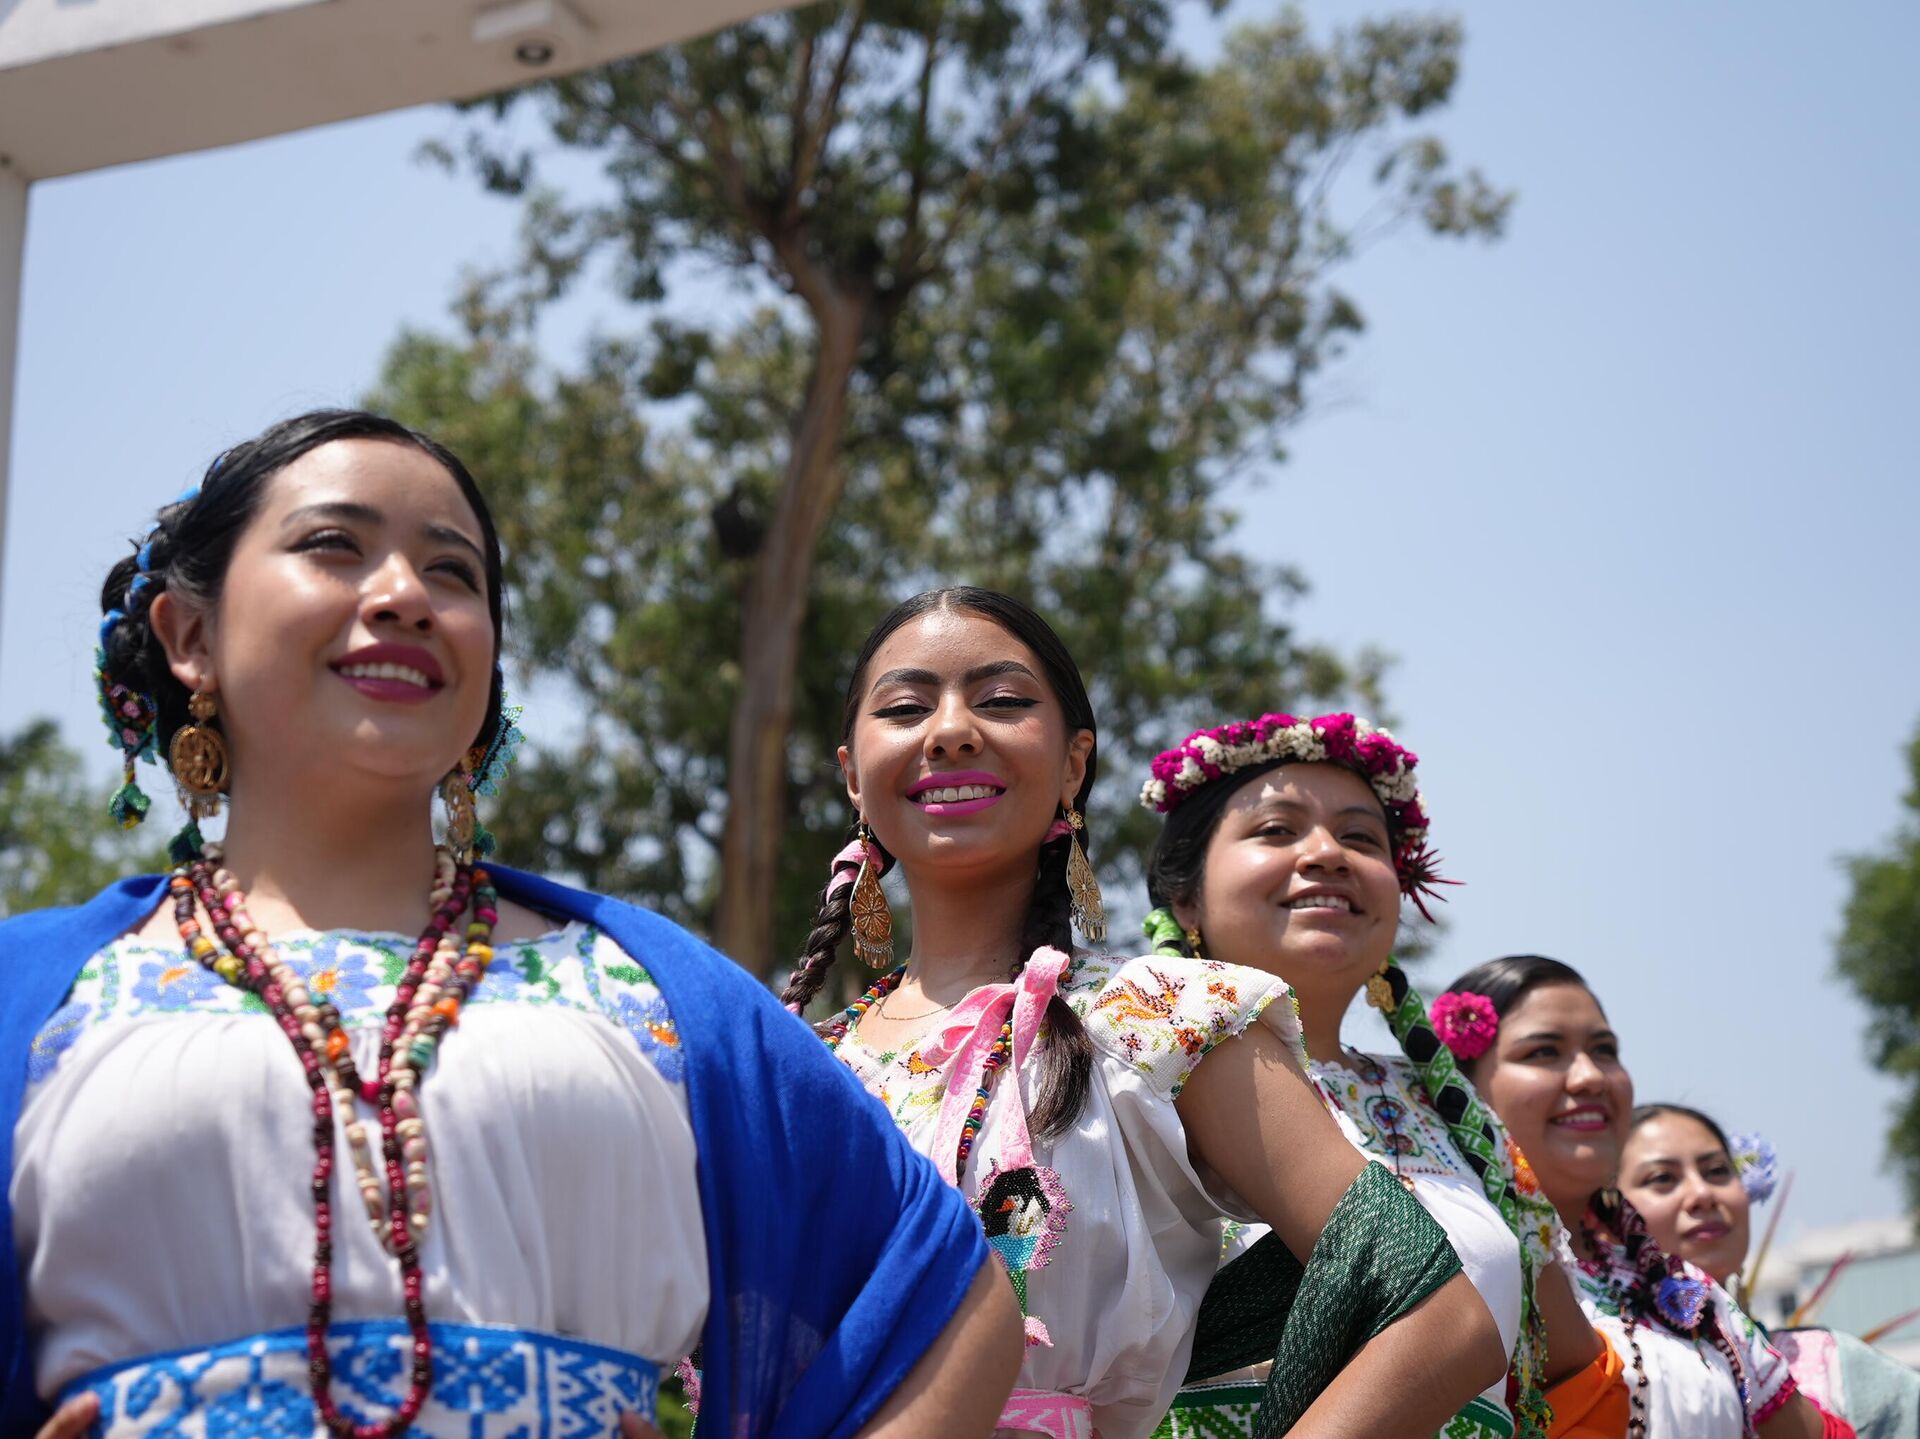 Belleza urbana mexicana: New Era celebra las jacarandas en su